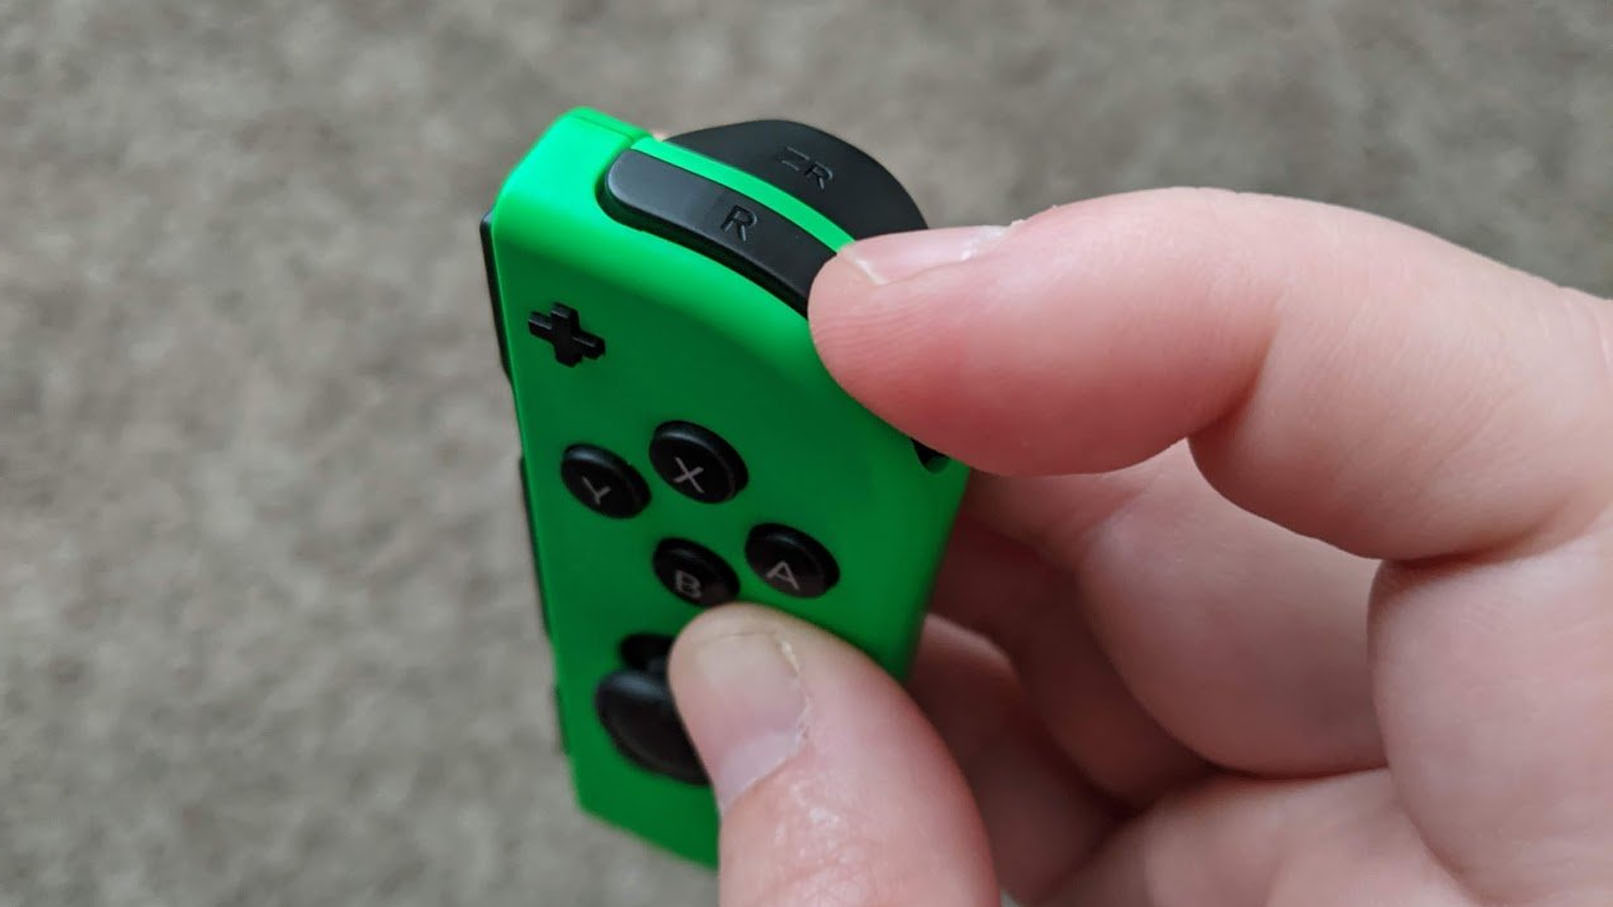 Nintendo Switch Joy-Con R button